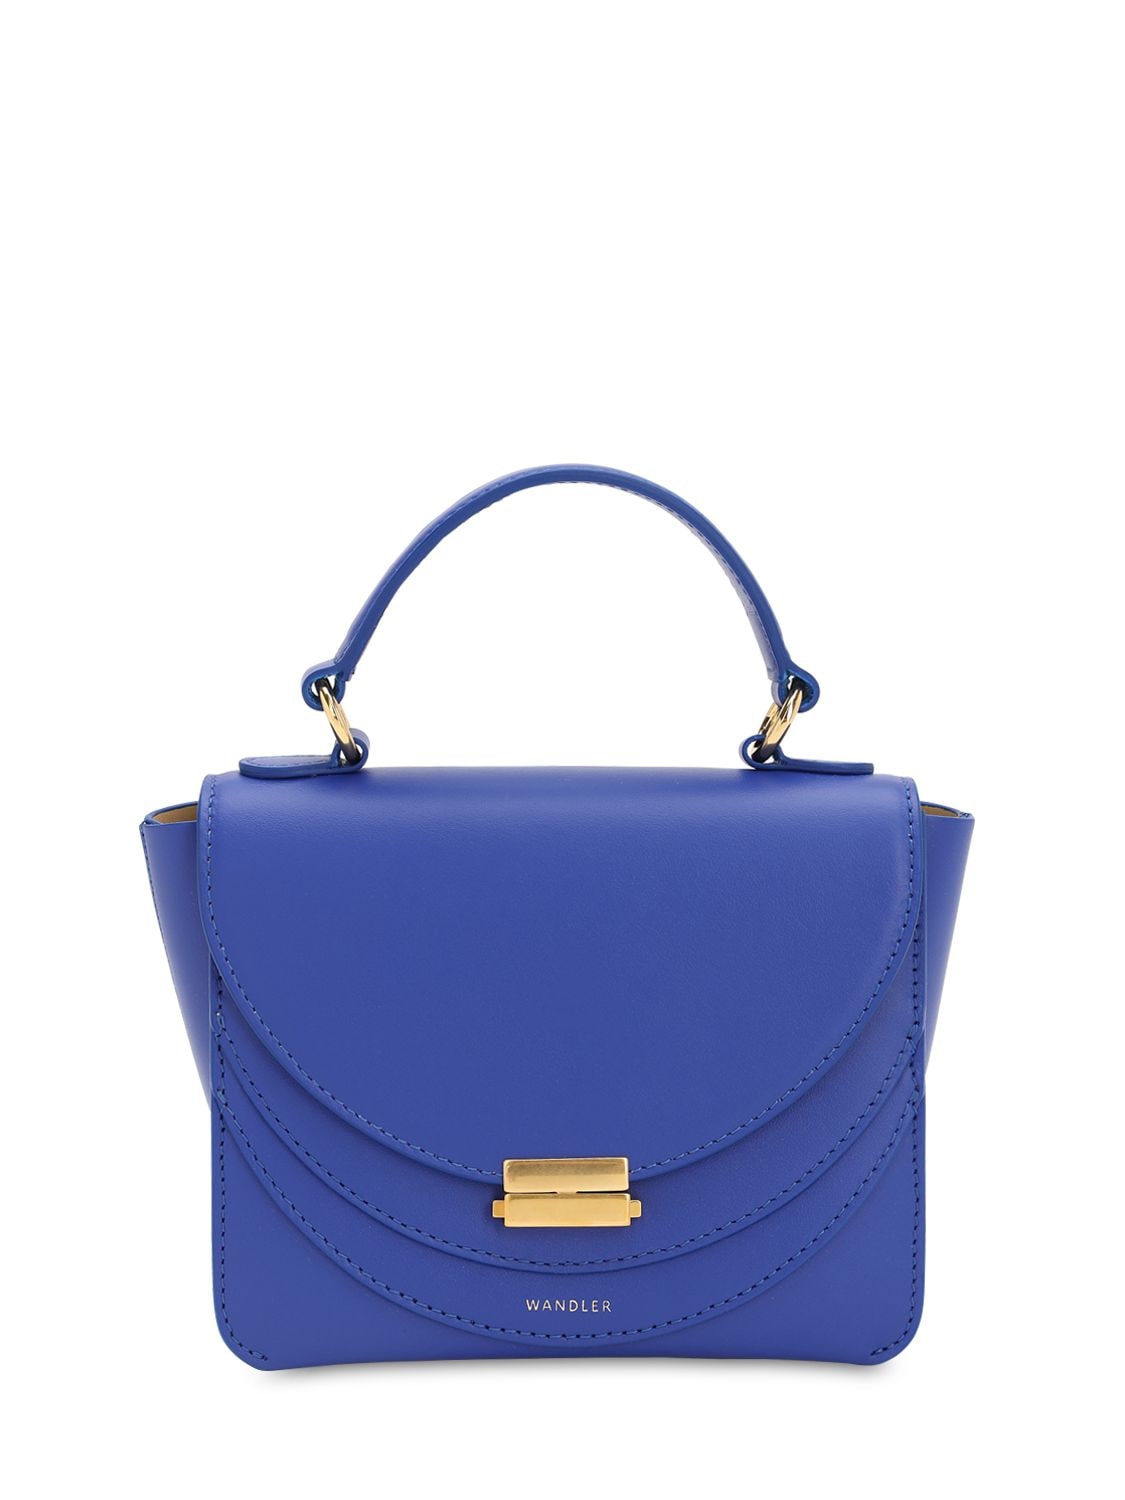 Wandler Mini Luna Smooth Leather Bag In Royal Blue